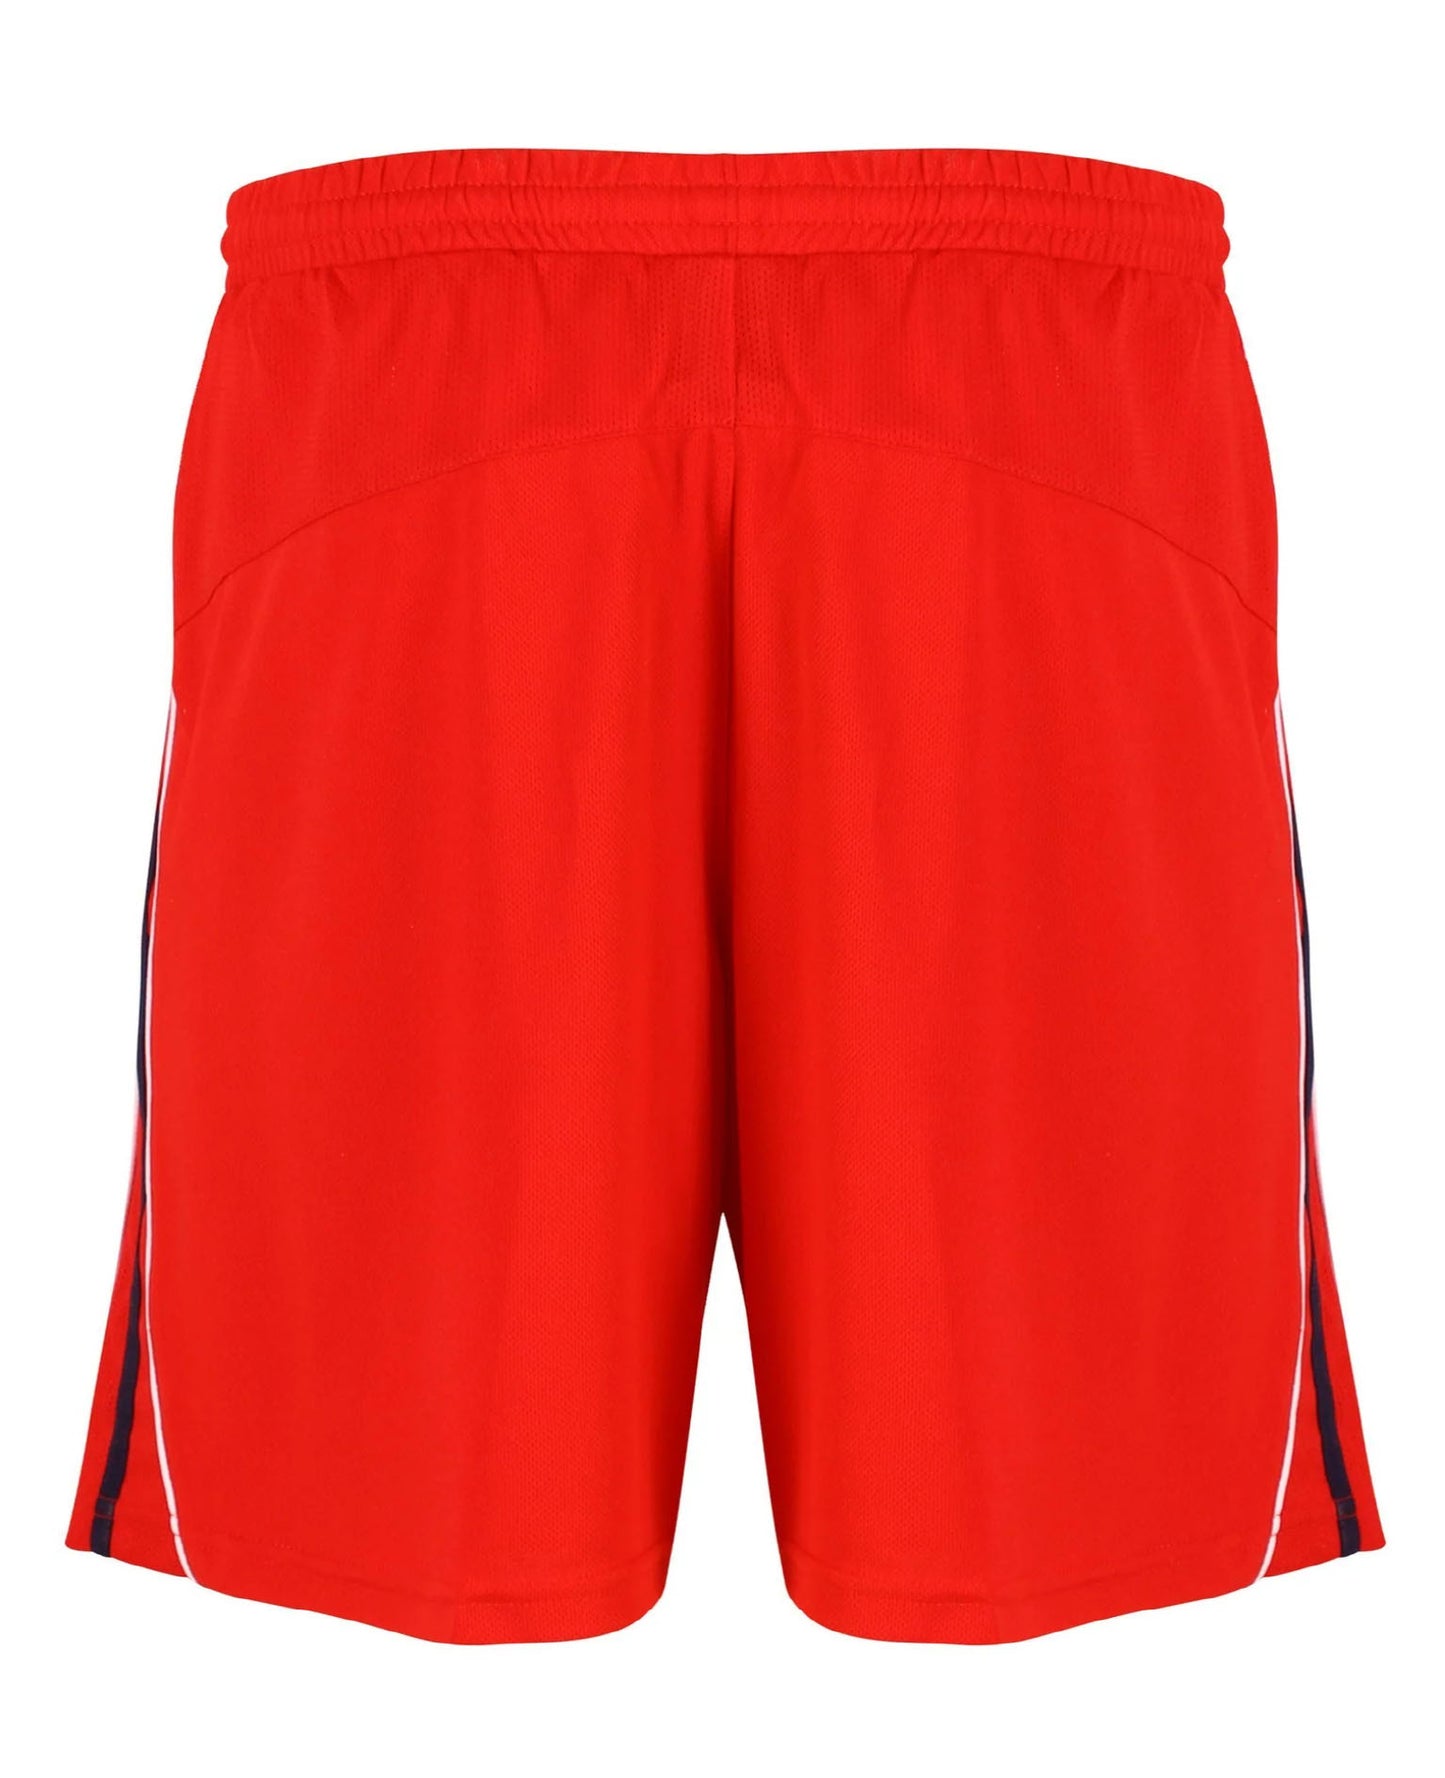 Boston Mesh Shorts - Red